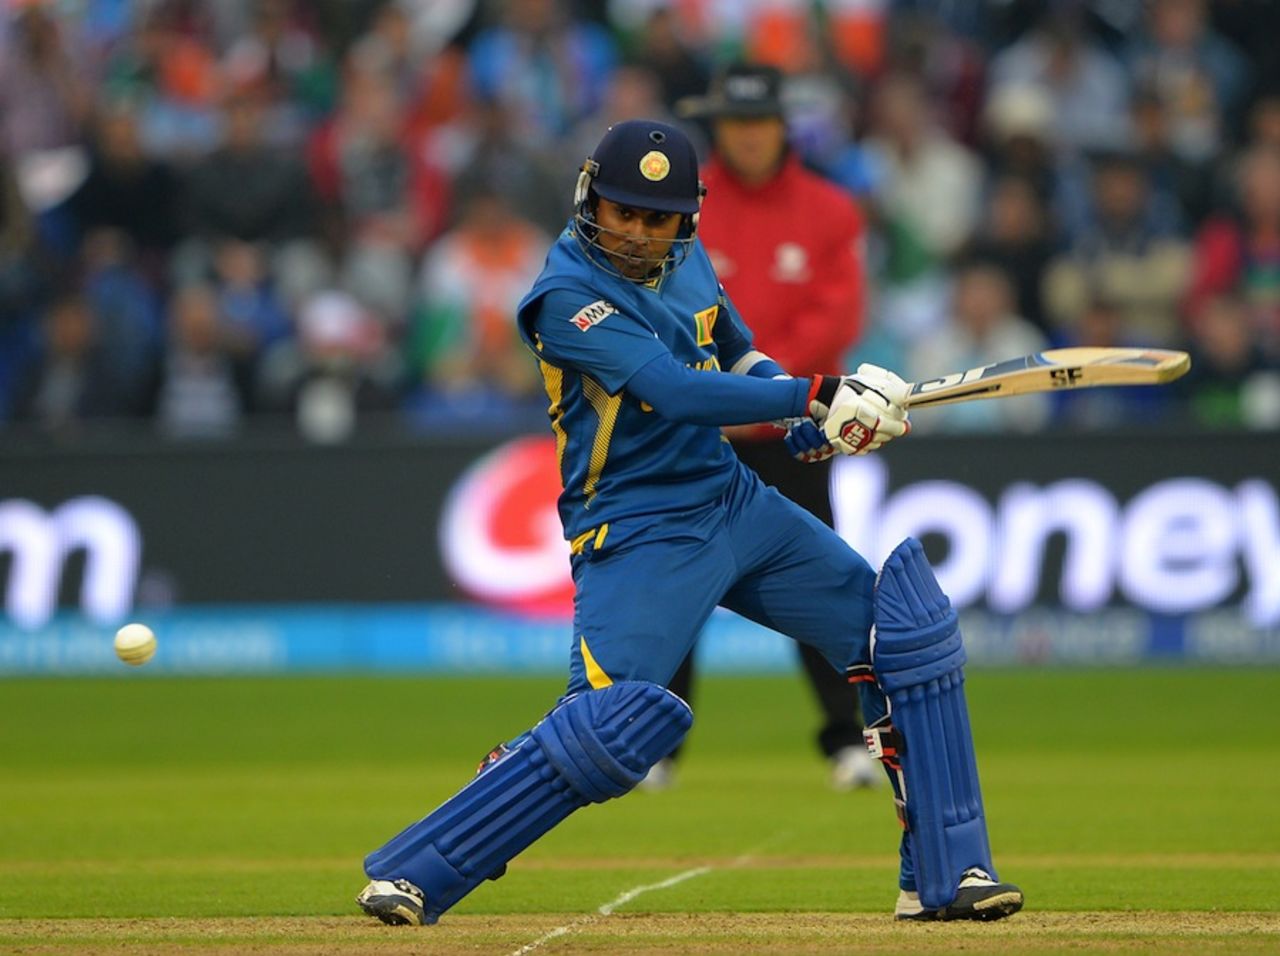 Mahela Jayawardene cuts one square, India v Sri Lanka, Champions Trophy, 2nd semi-final, Cardiff, June 20, 2013